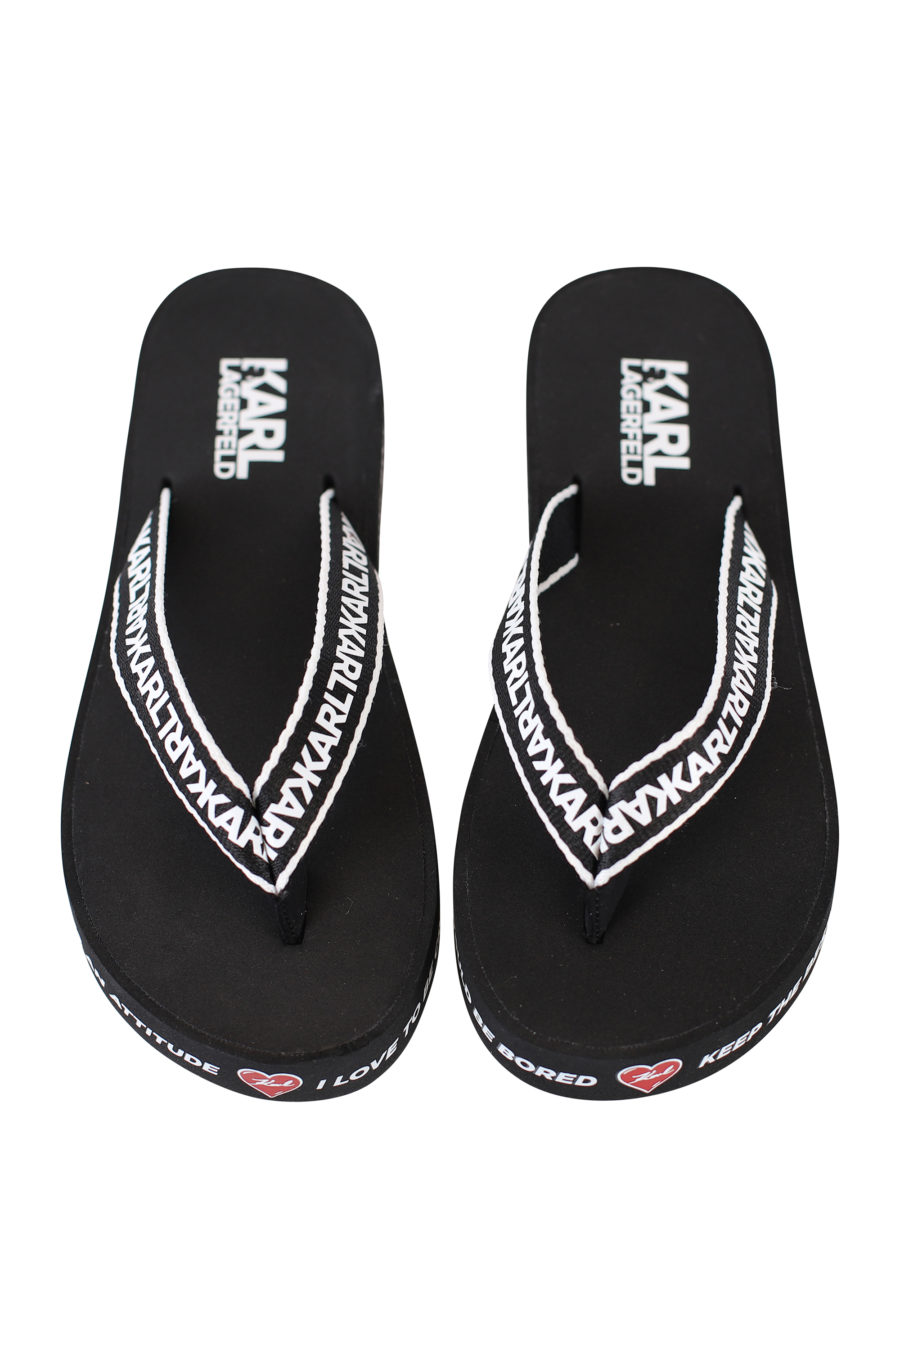 Black flip flops with ribbon logo - IMG 2168